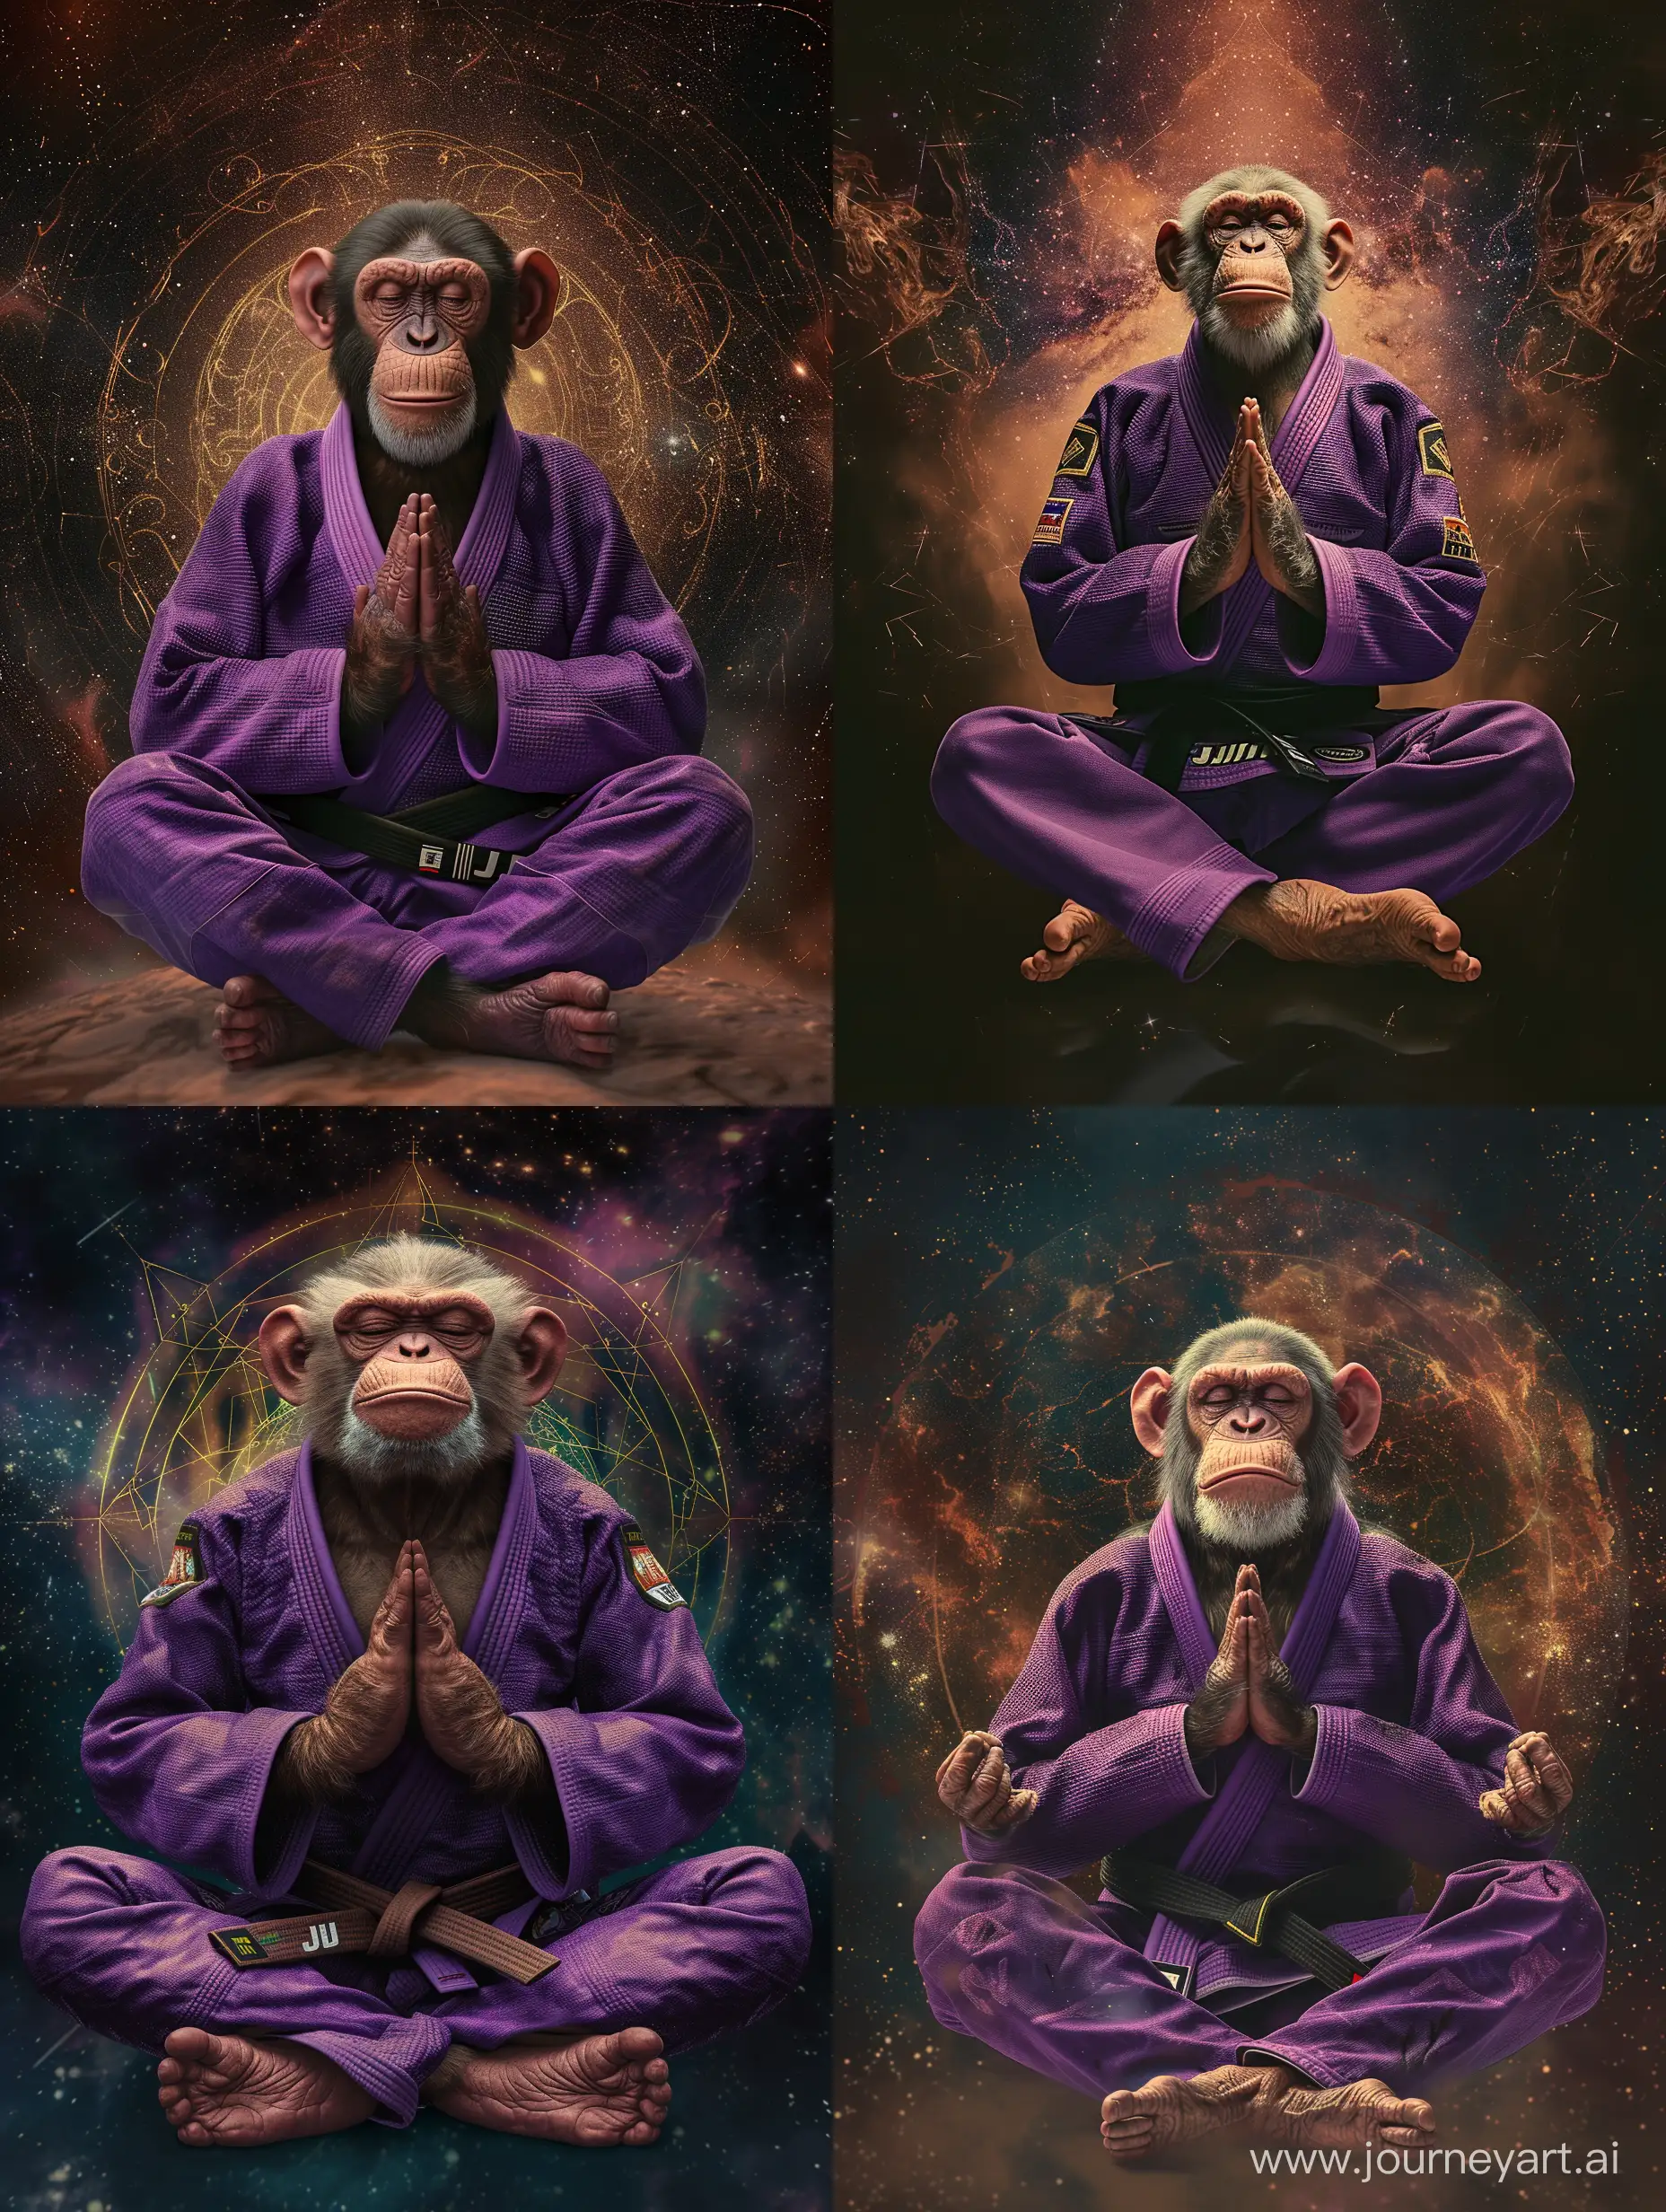 Meditating-Monkey-in-Purple-Brazilian-Jiu-Jitsu-Gi-with-Cosmic-Background